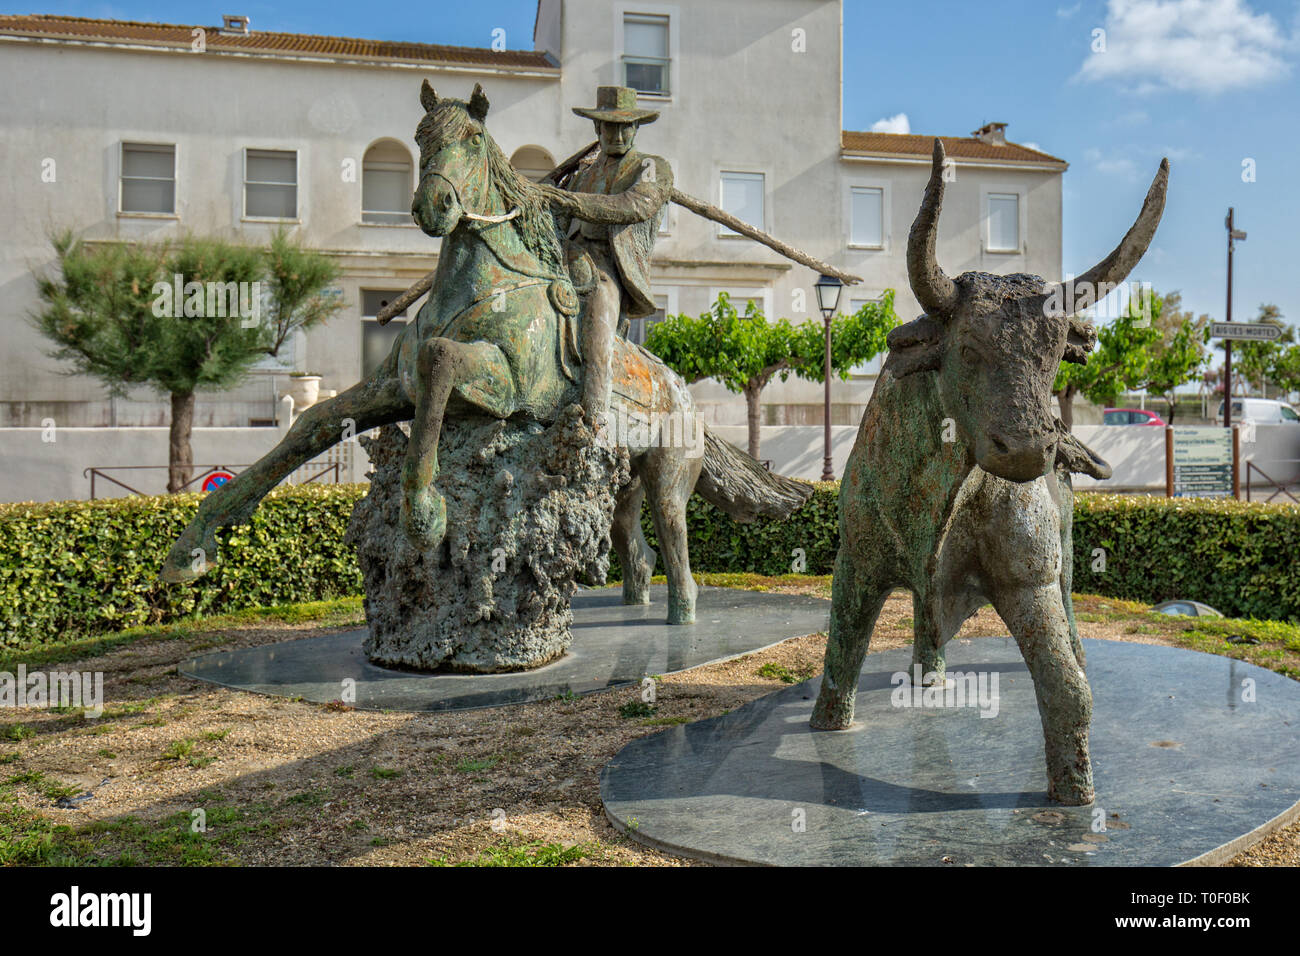 Les Saintes-Maries-de-la-Mer, Provenza, Camarque, Francia - 01 GIU 2017: Corrida, statua in bronzo. La scultura del guardiano di cavalli Camargue. Foto Stock